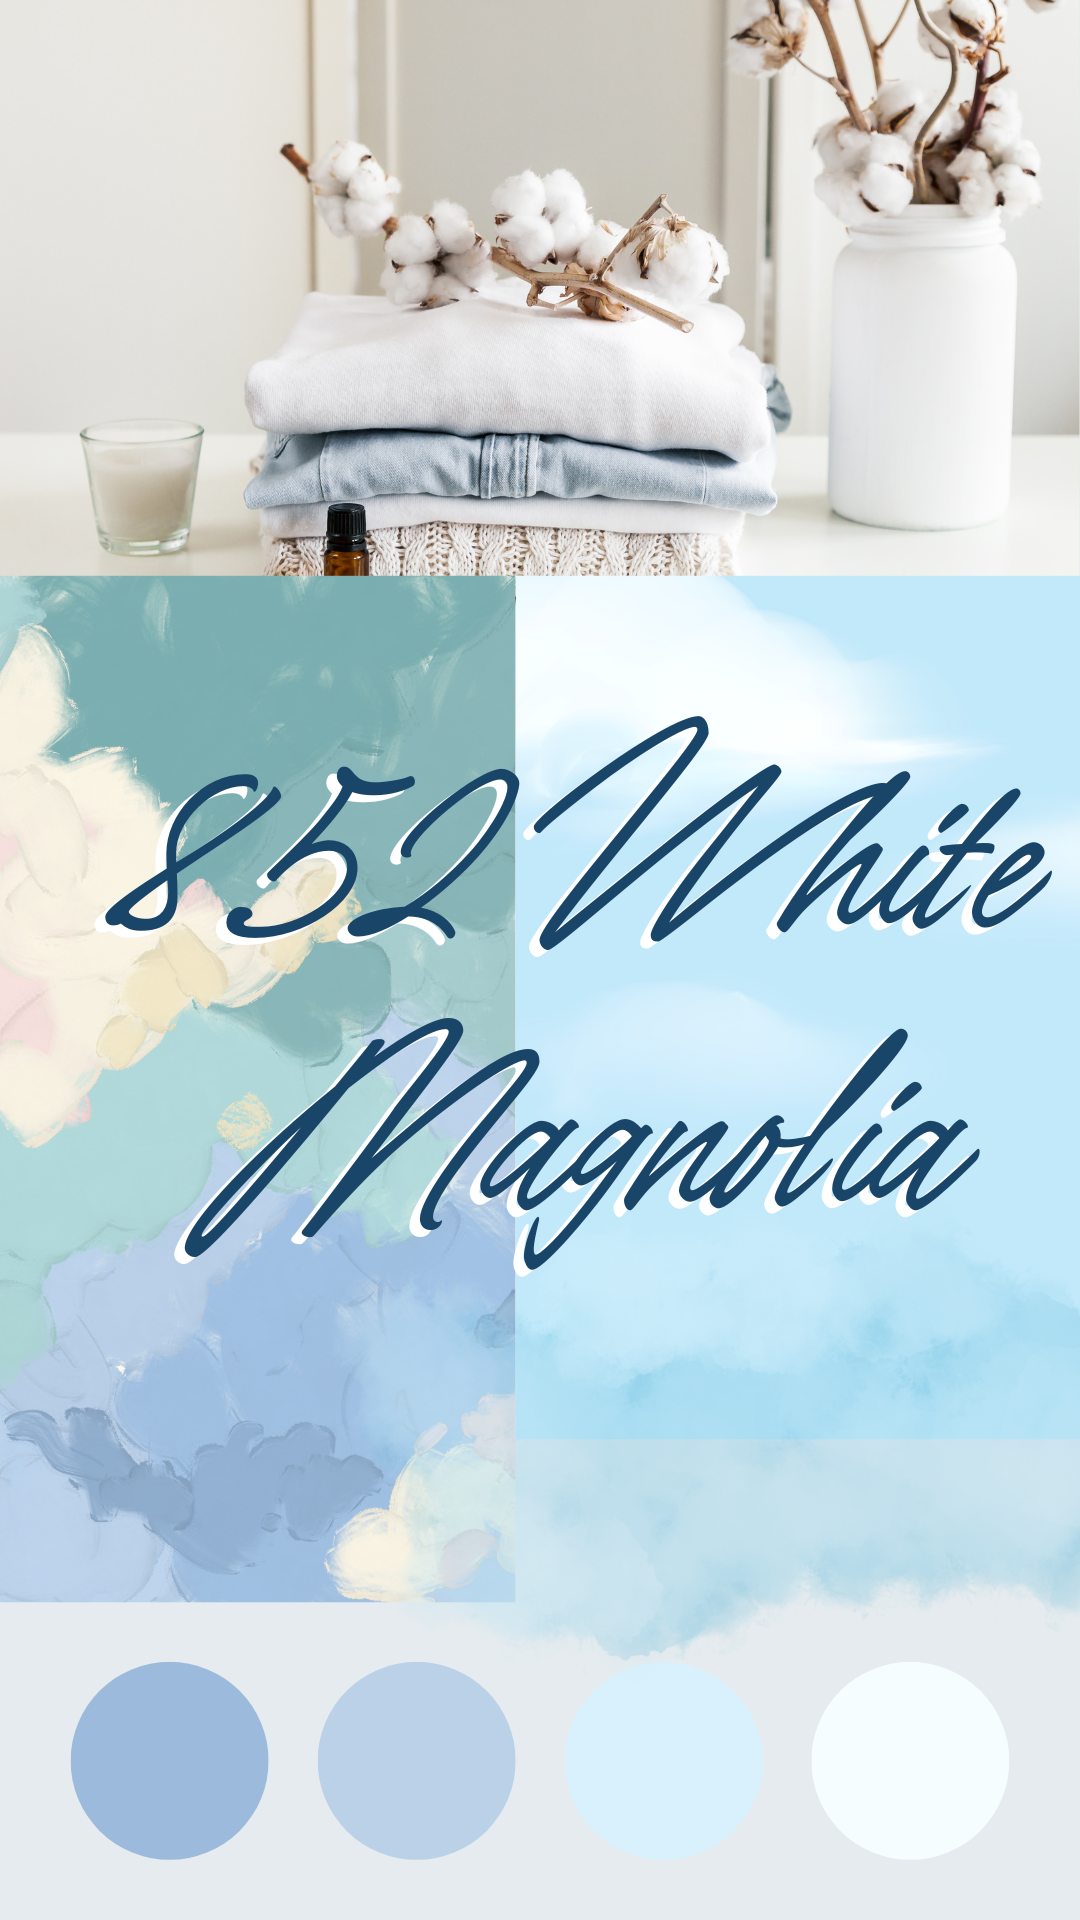 Solid Perfume - 852 White Magnolia (NEW)